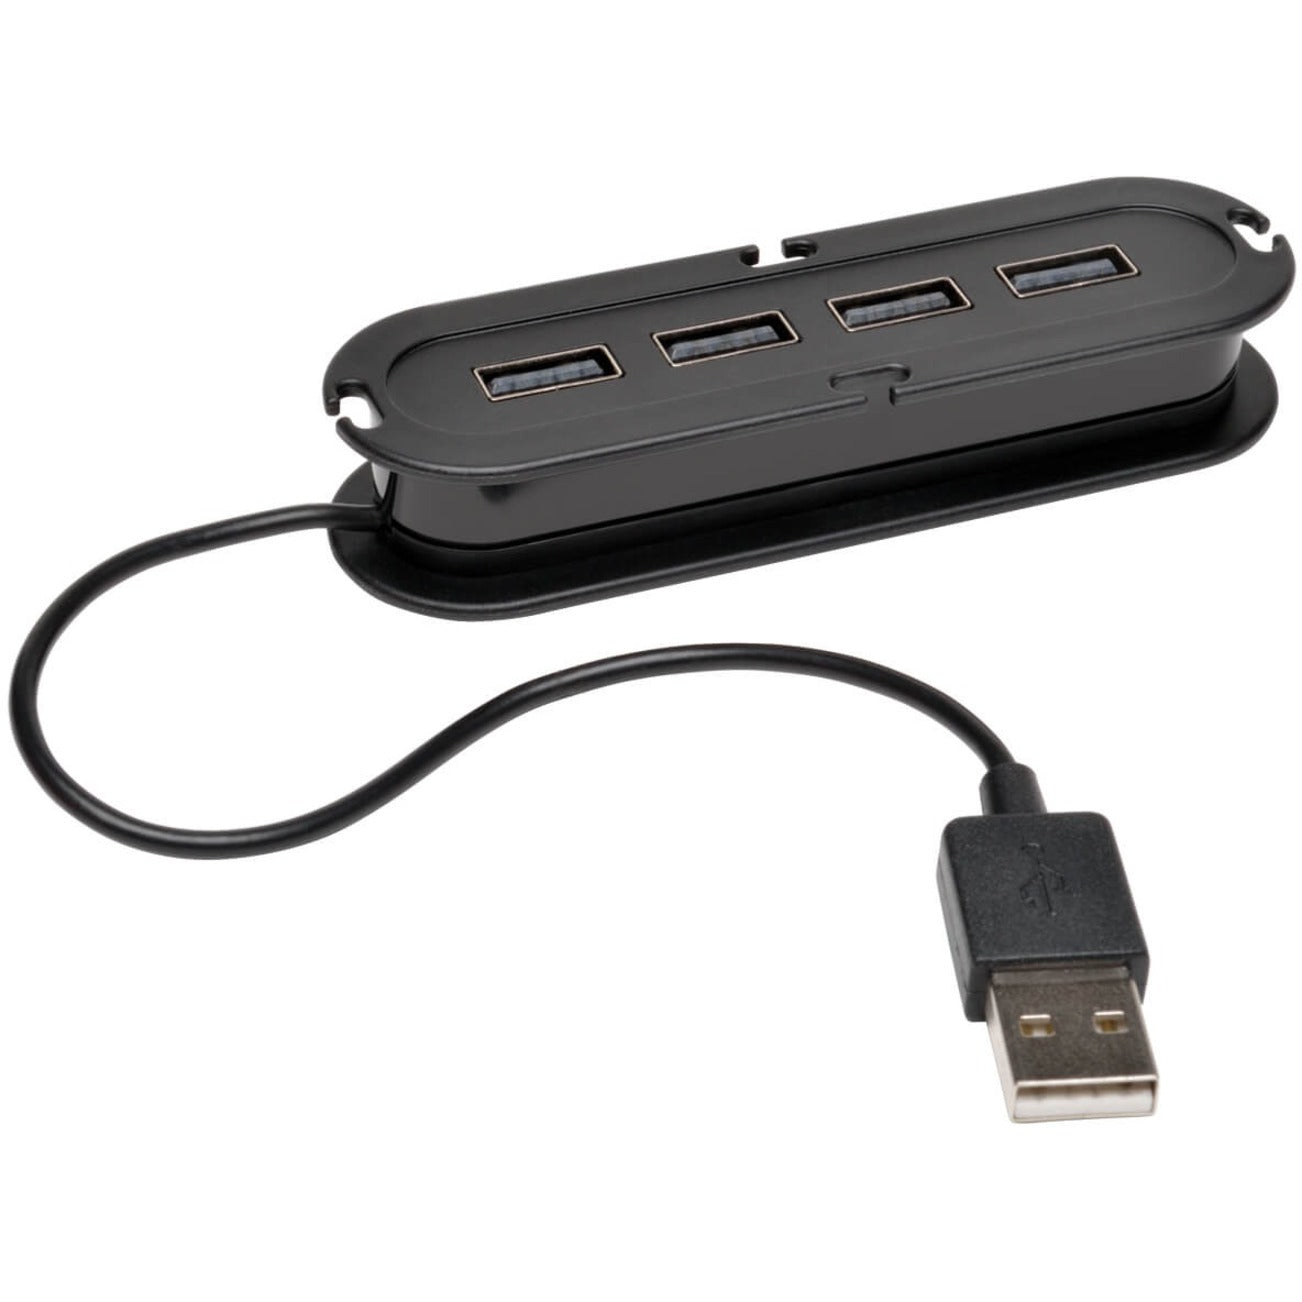 Tripp Lite U222-004 4-Port USB 2.0 Ultra-Mini Hub, High-Speed Data Transfer and Easy Connectivity